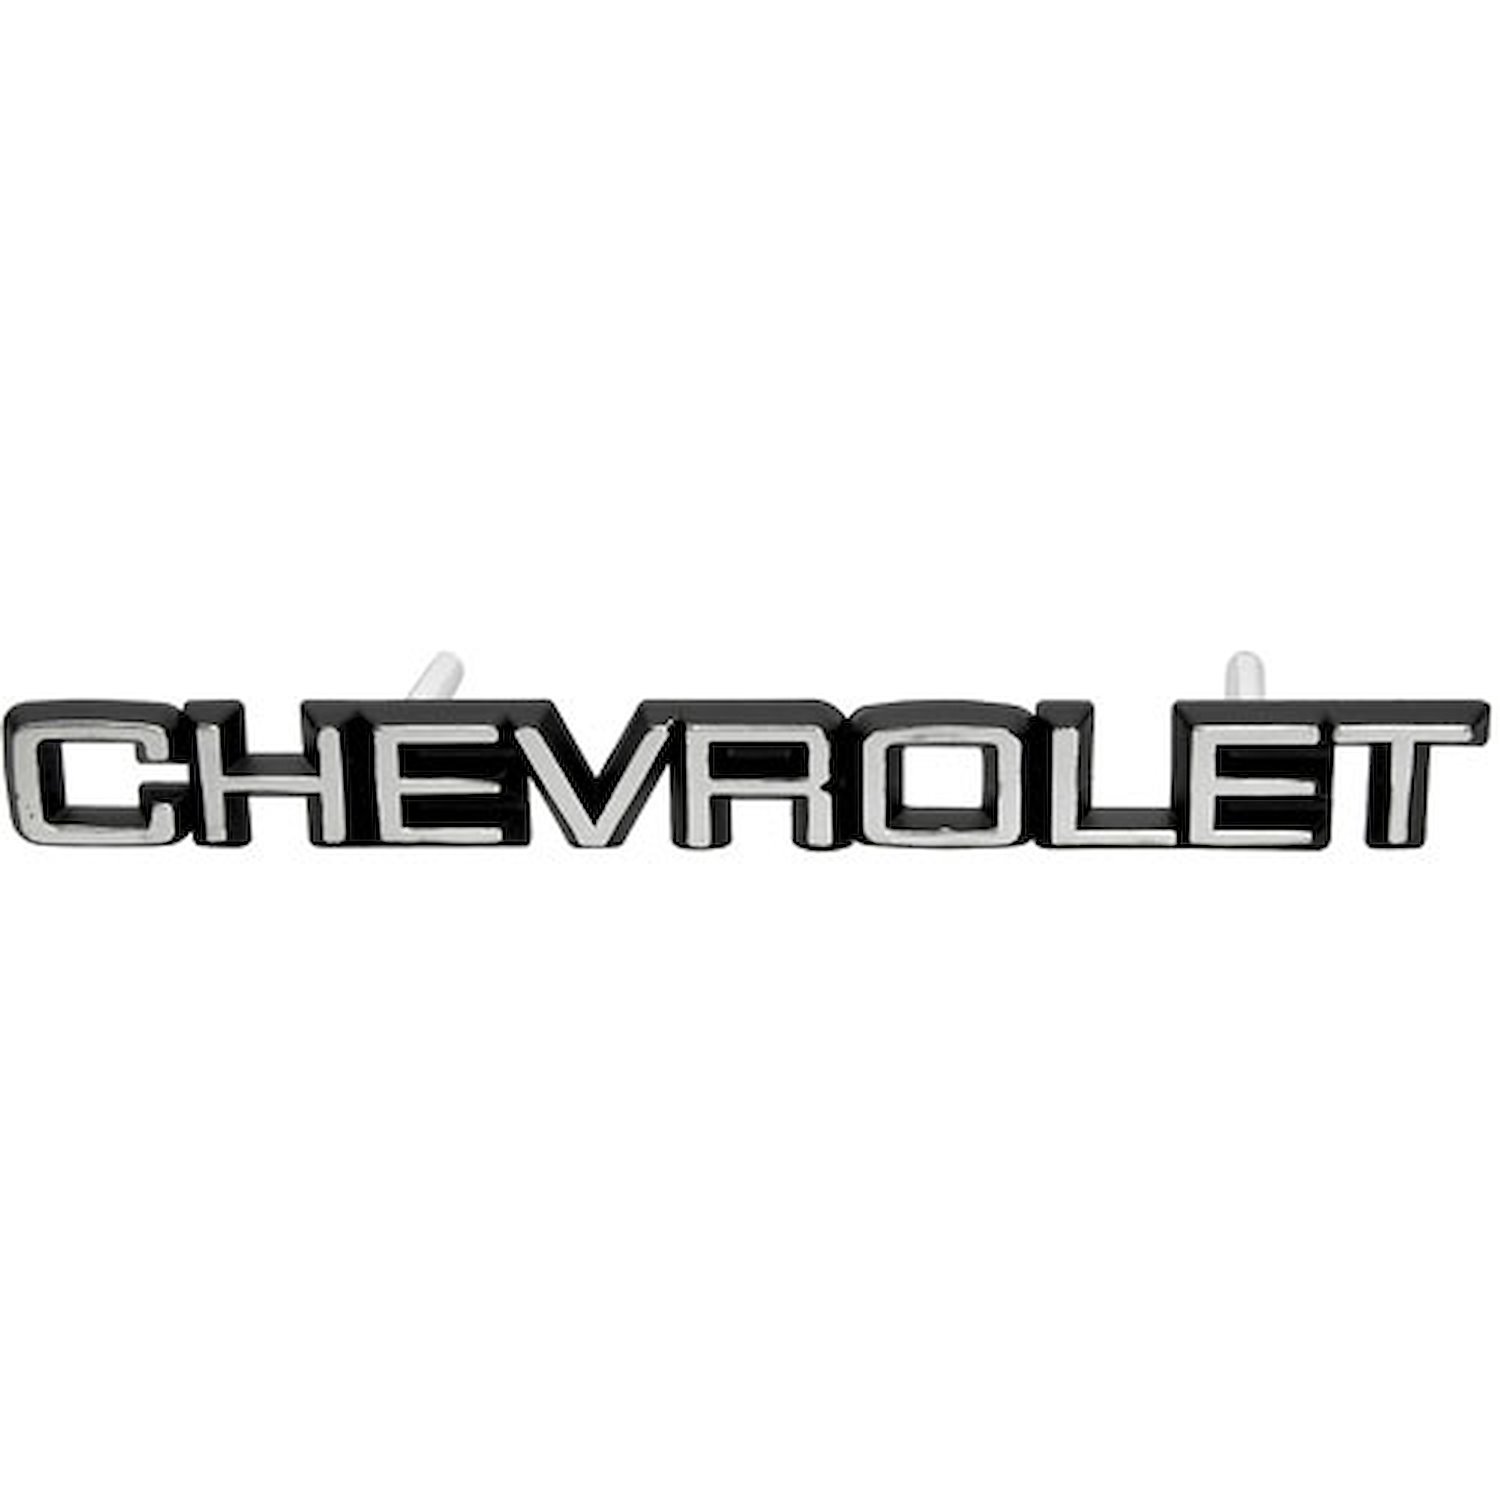 "Chevrolet" Grille Emblem 1982-87 Chevy El Camino